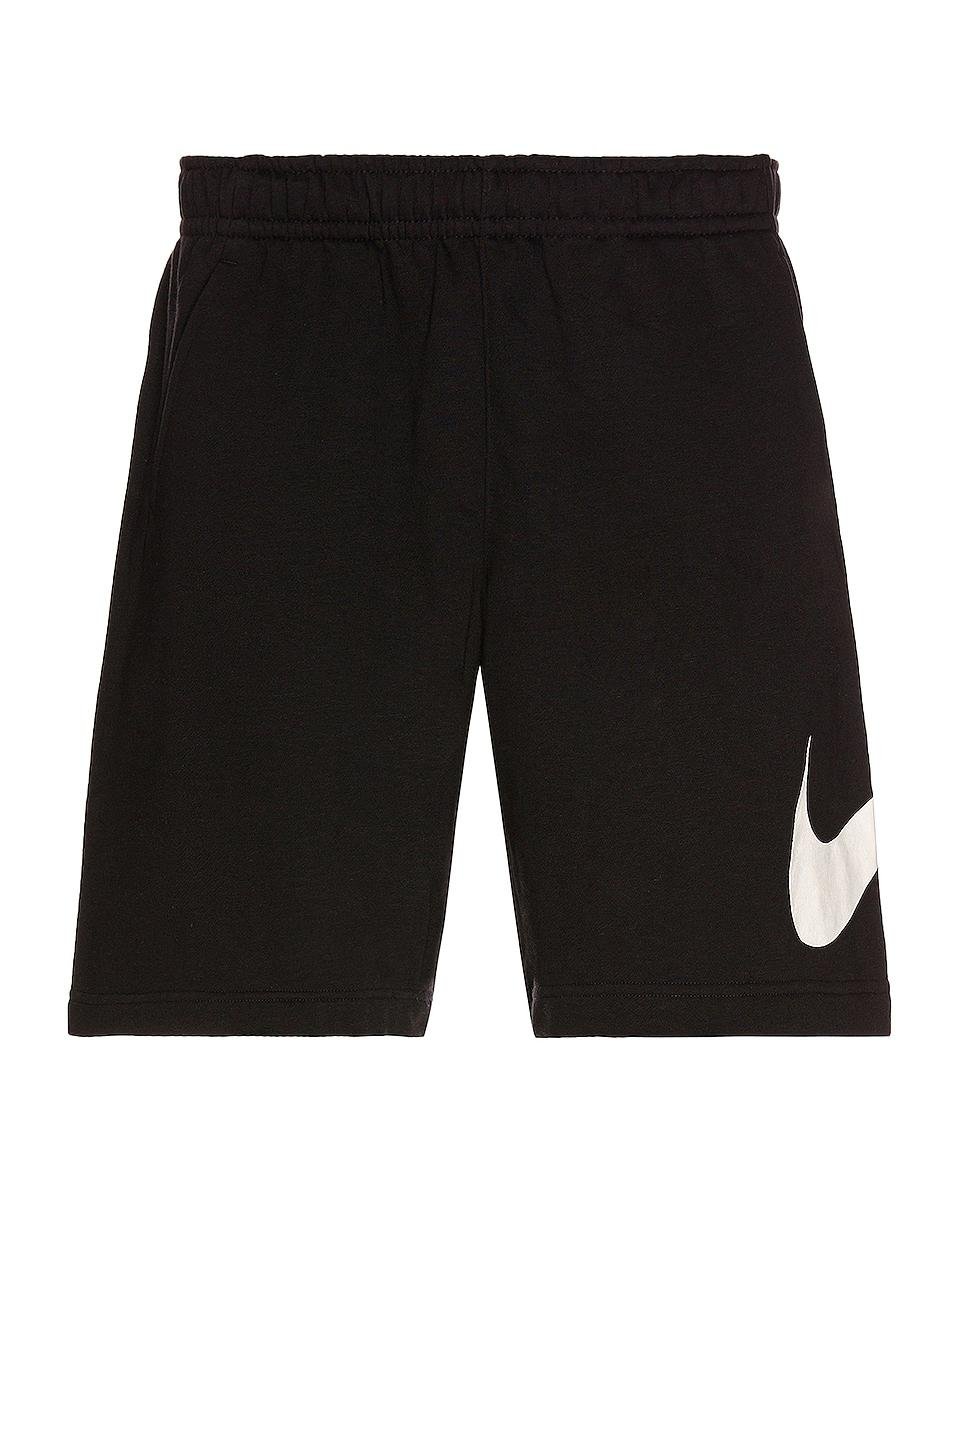 Nike NSW Club Short in Black by NIKE